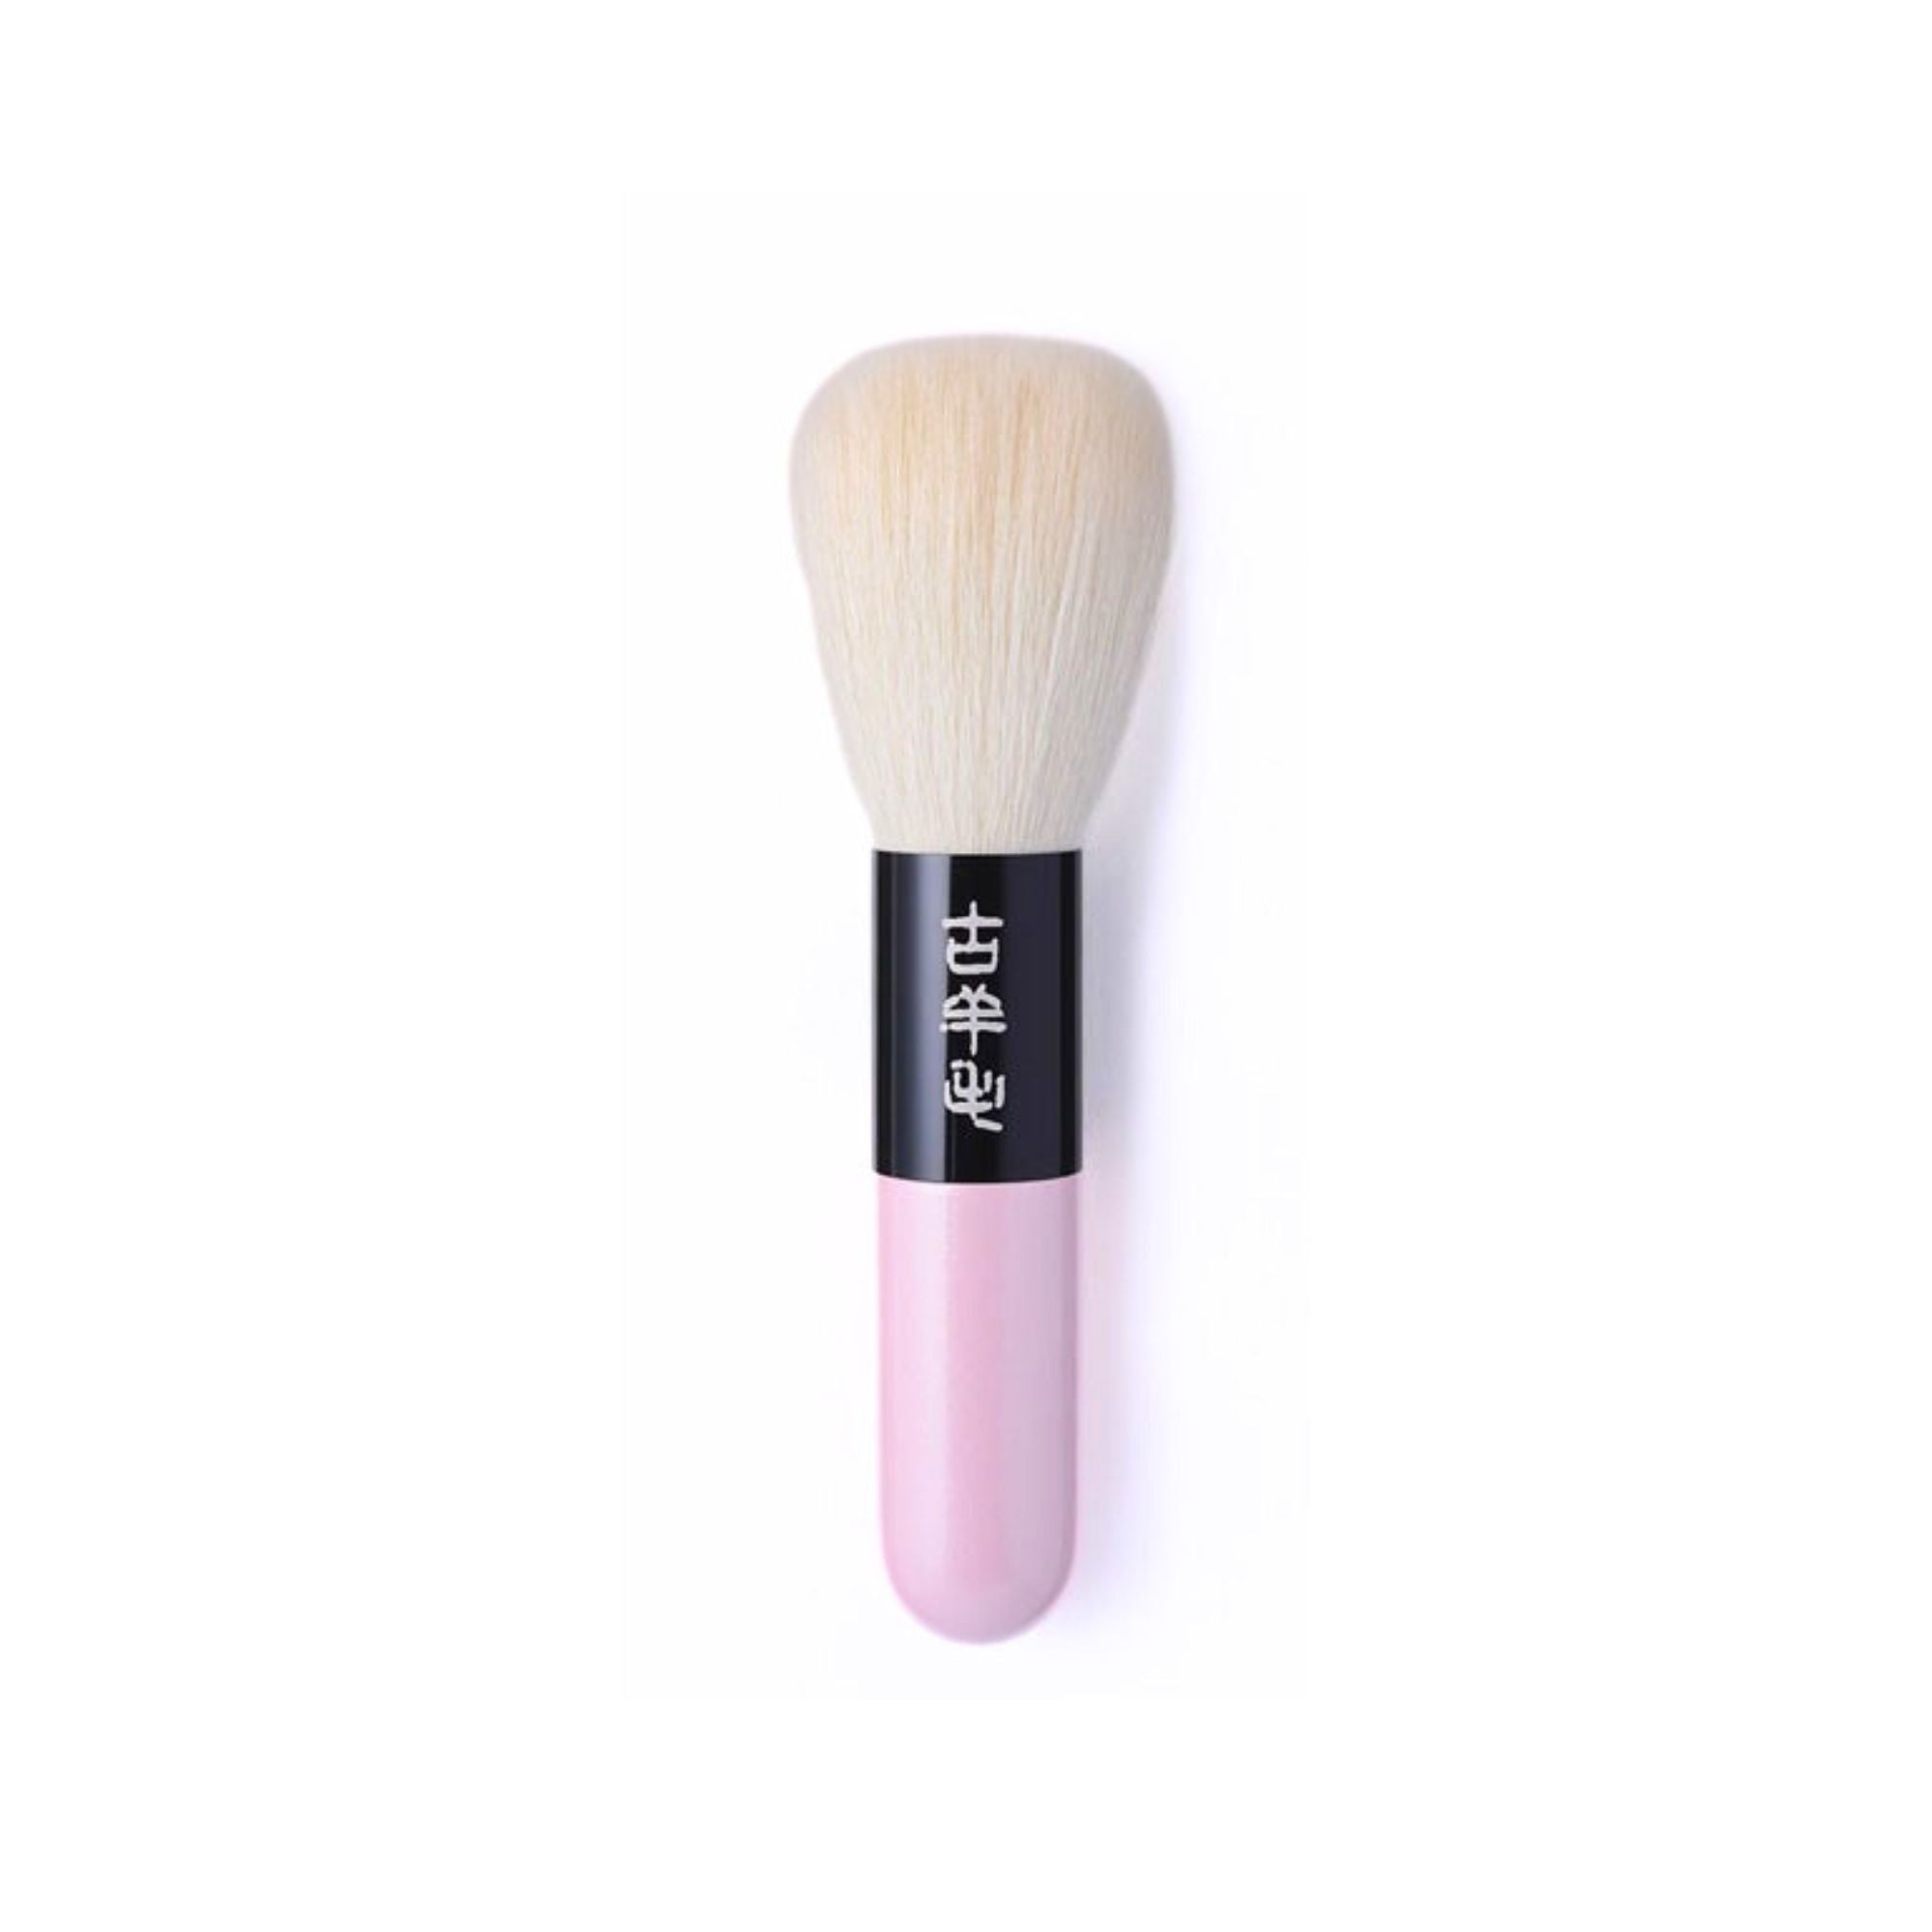 Koyomo Pearl Pink Nadeshiko Face Brush - Fude Beauty, Japanese Makeup Brushes